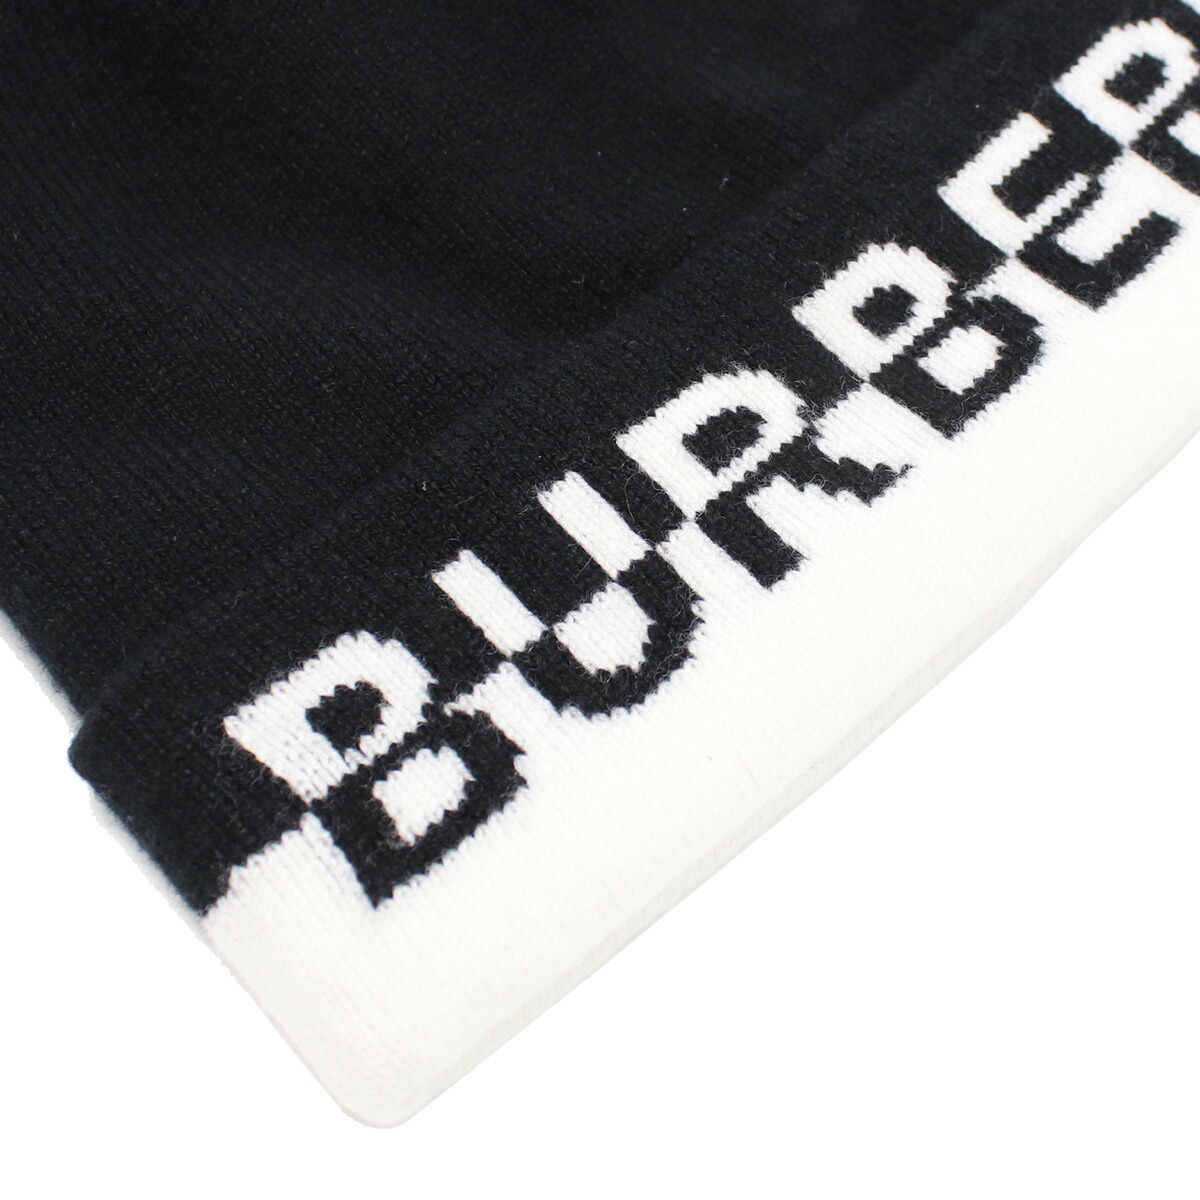 Armerie Boutique バーバリー BURBERRY メンズ－ニット帽 ブランド ロゴ入り 8058054 A1189  BLACK-WHITE ブラック cap-01 warm-02